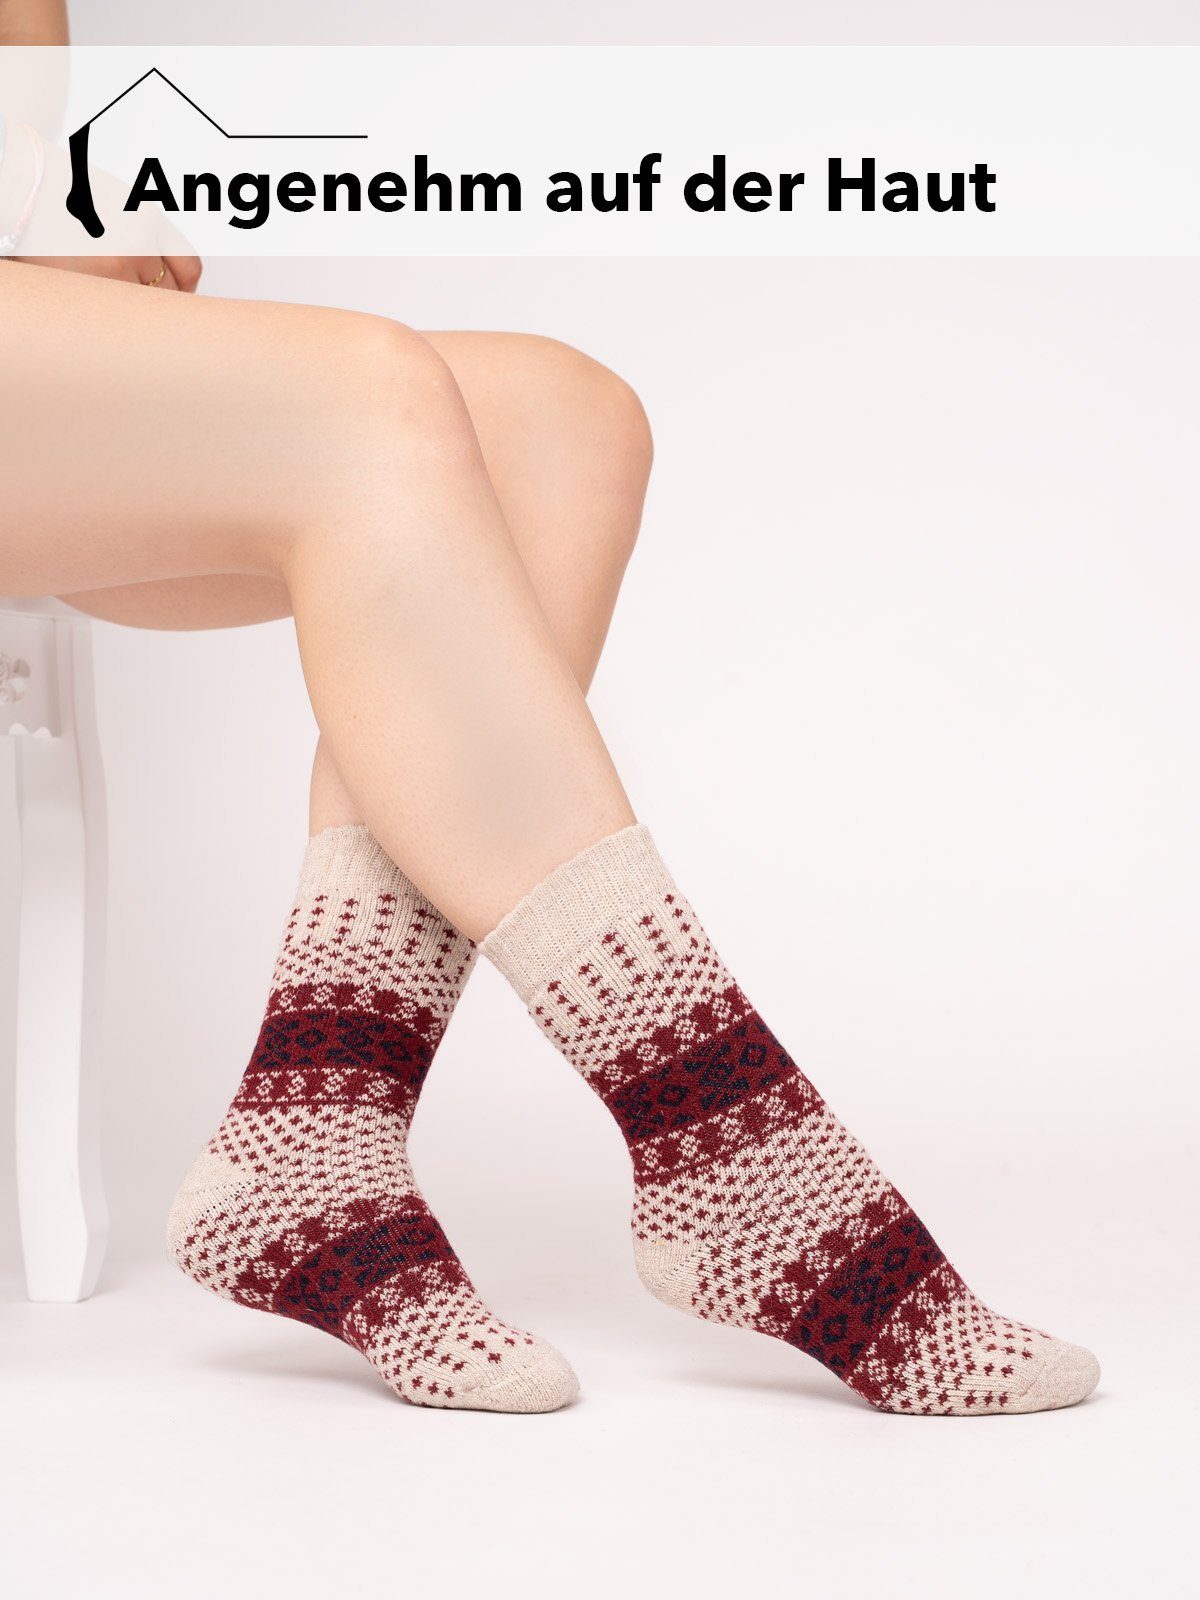 HomeOfSocks Socken Hygge Warm Damen Herren Socken Mit Dick & Dicke Hohem Grau Wollanteil 45% Bunten Hyggelig Für In Socken Wolle mit Design